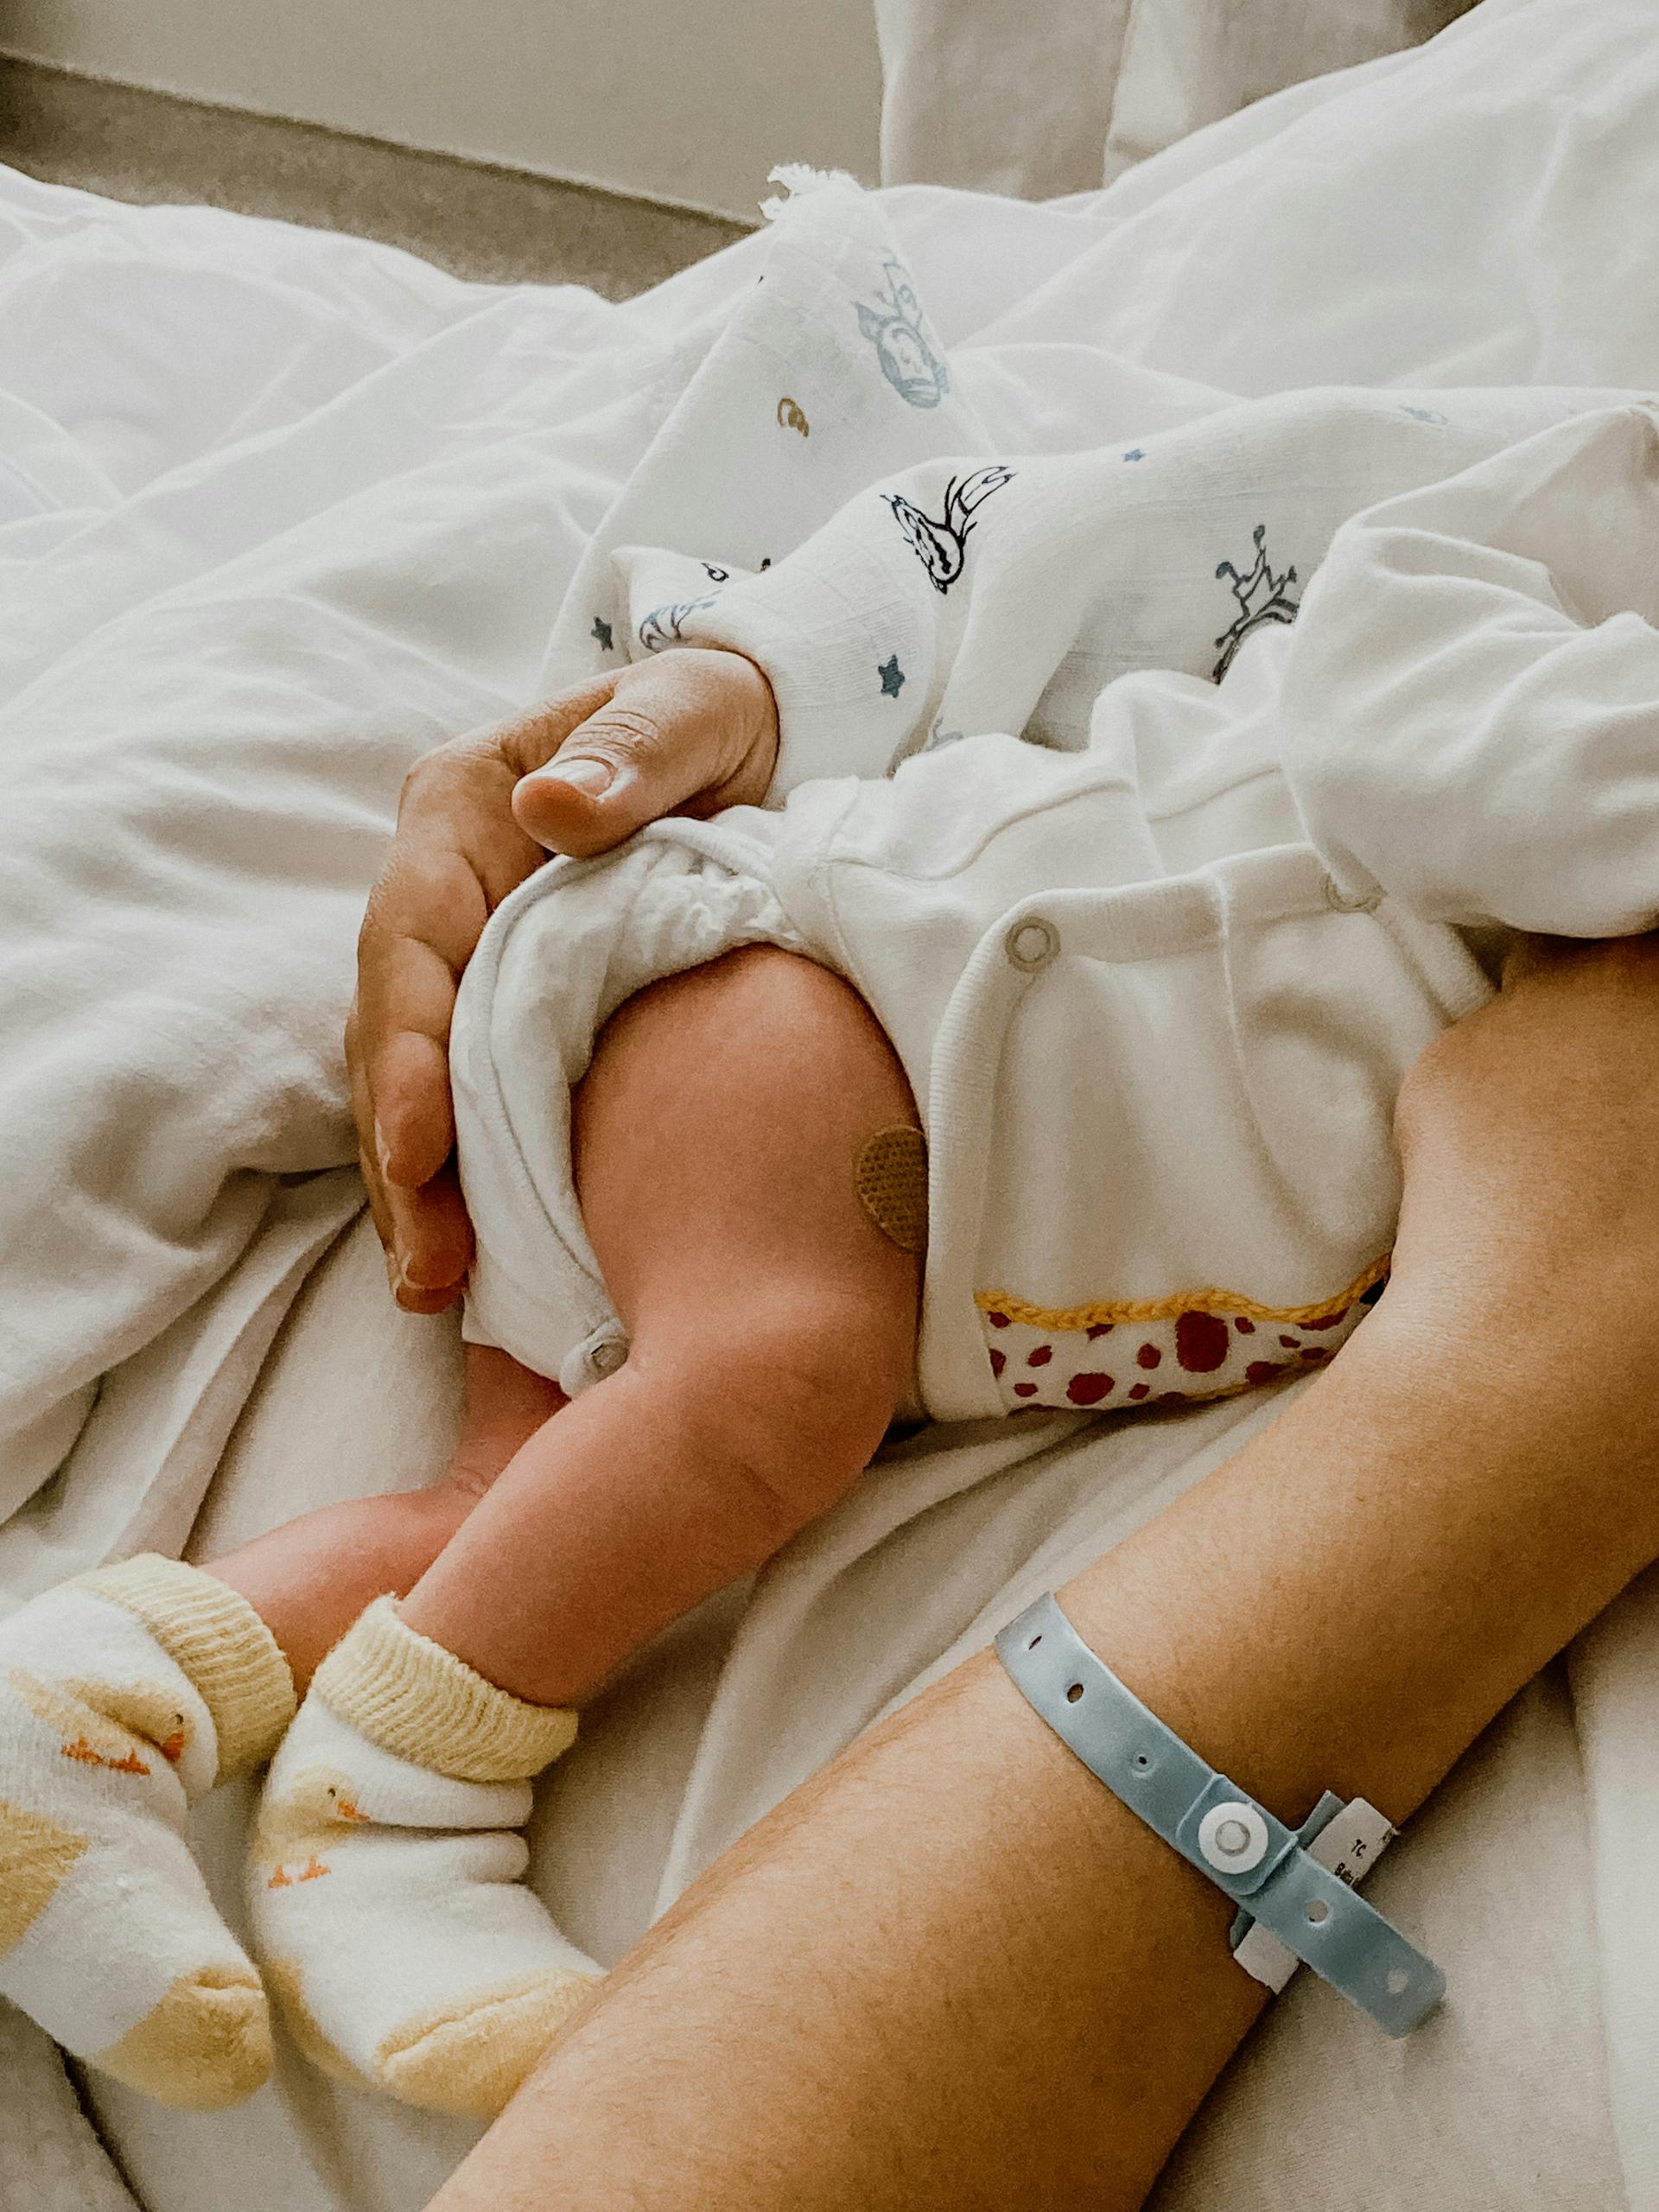 A woman holding a newborn | Source: Pexels